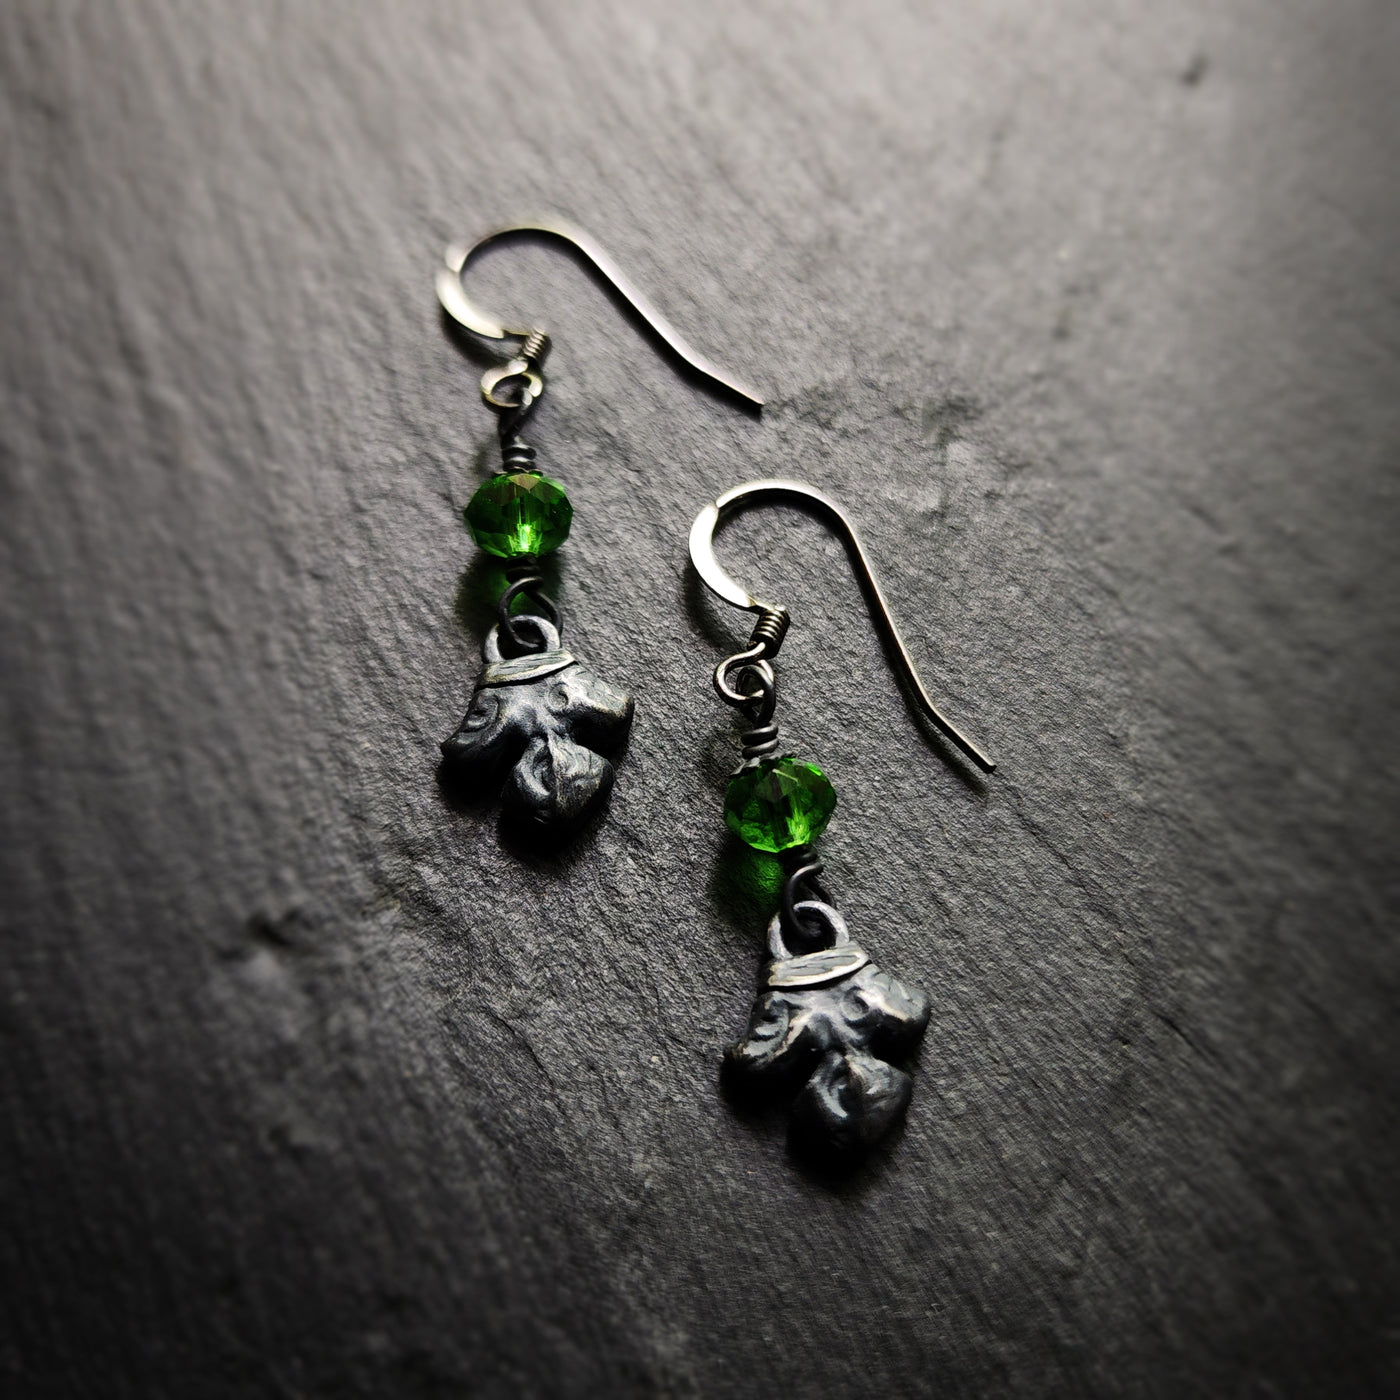 fleur earrings : green glass & antiqued sterling